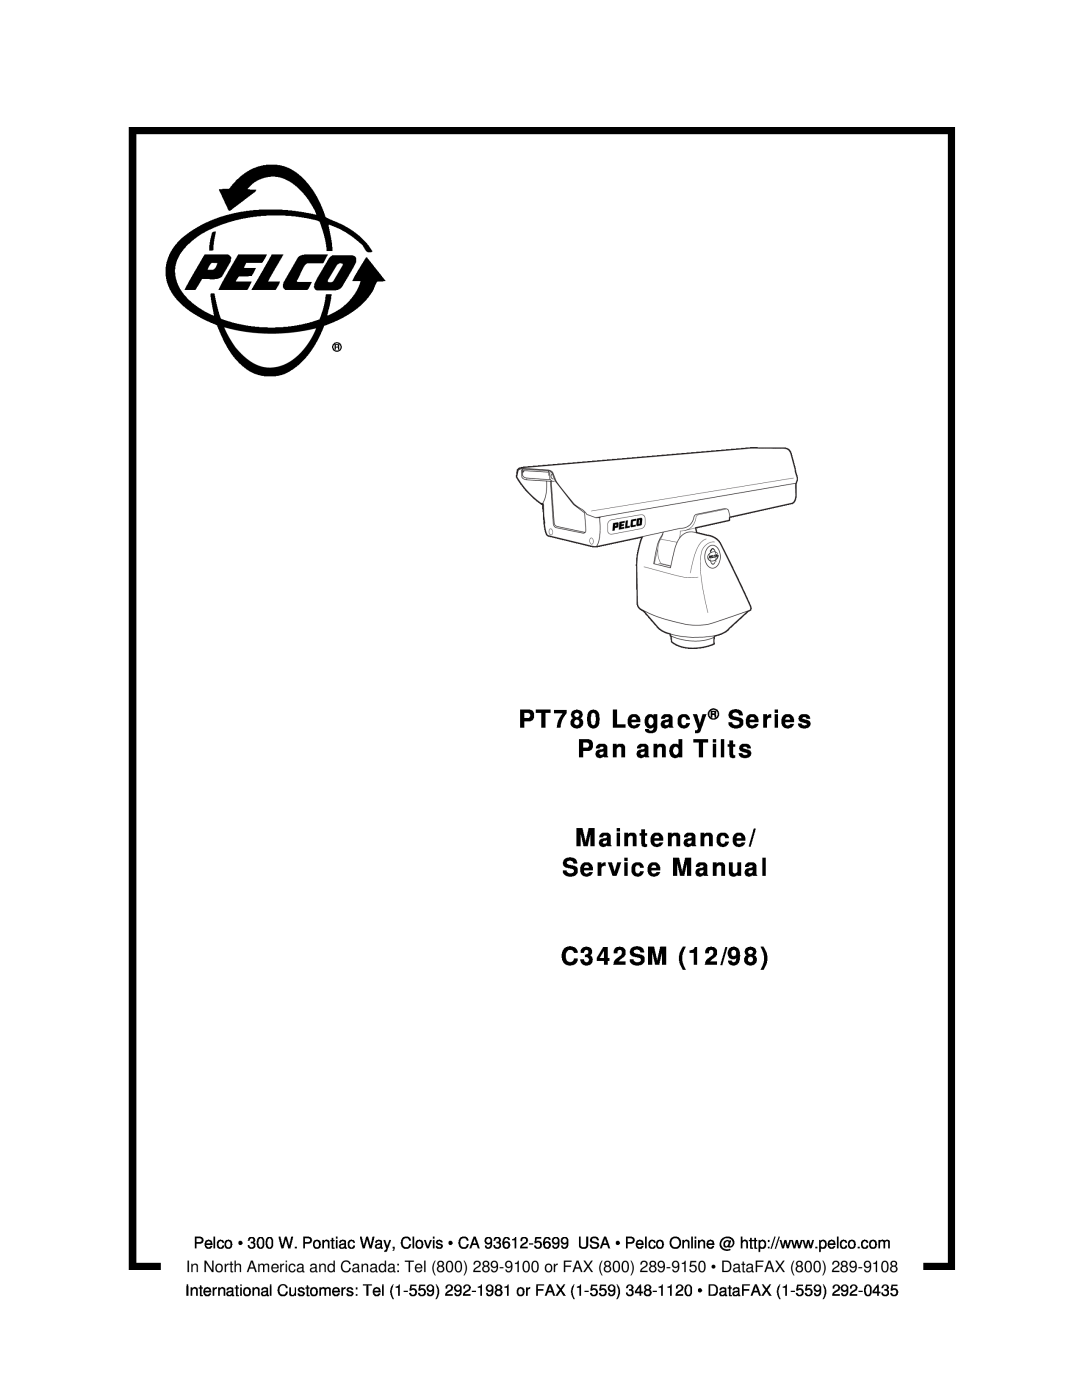 Pelco service manual PT780 Legacy Series Pan and Tilts Maintenance 